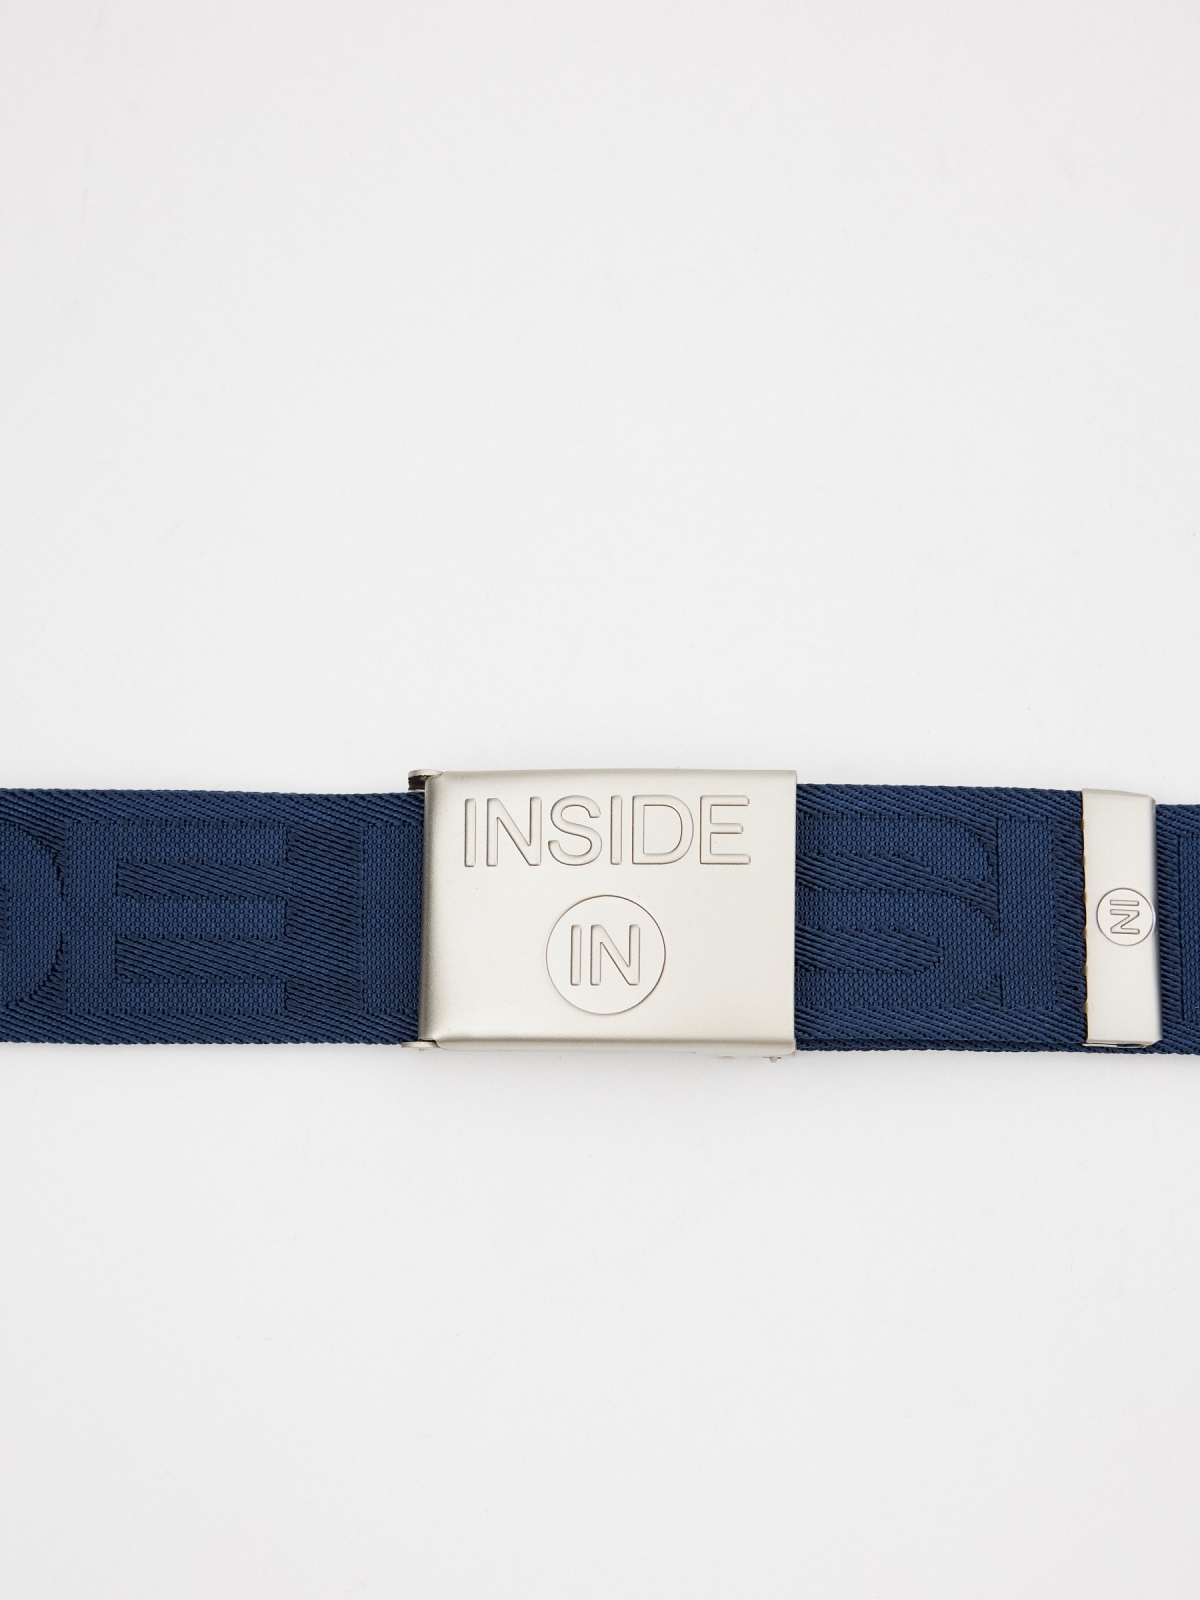 INSIDE Men's Canvas Belt dark blue detail view